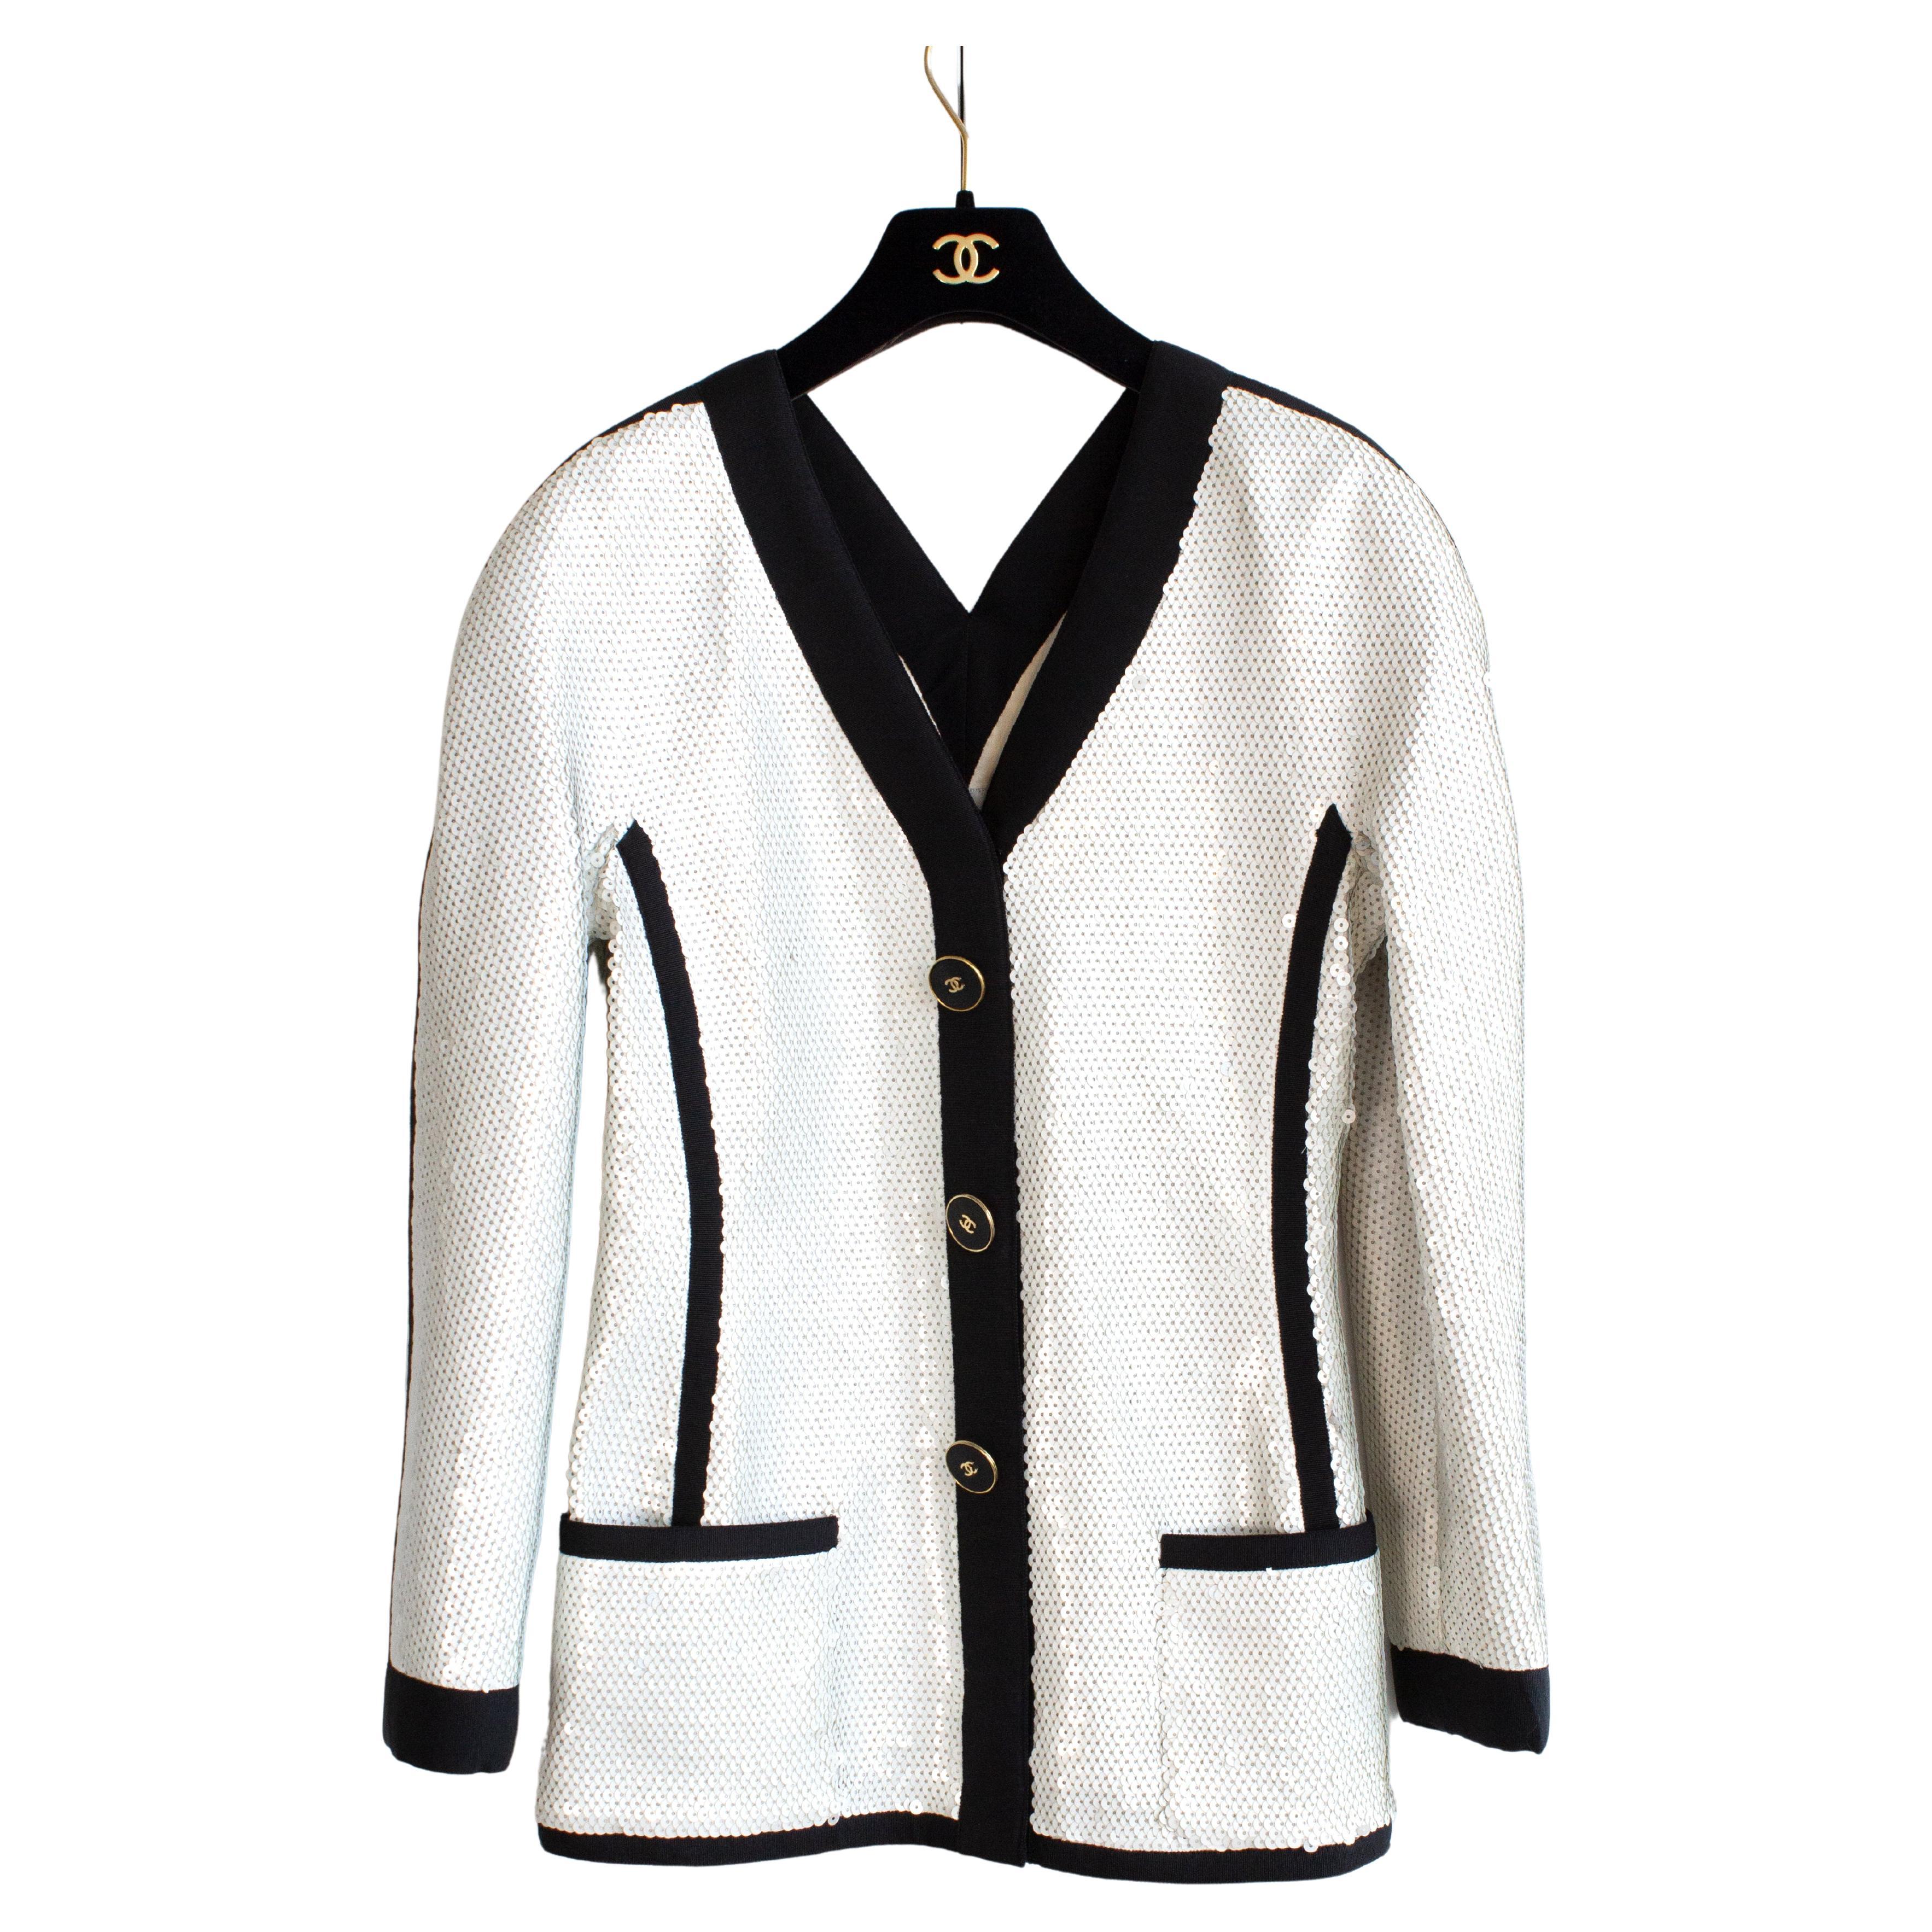 Rare Chanel Vintage S/S 1991 Collector White Black Sequin CC Scuba Jacket